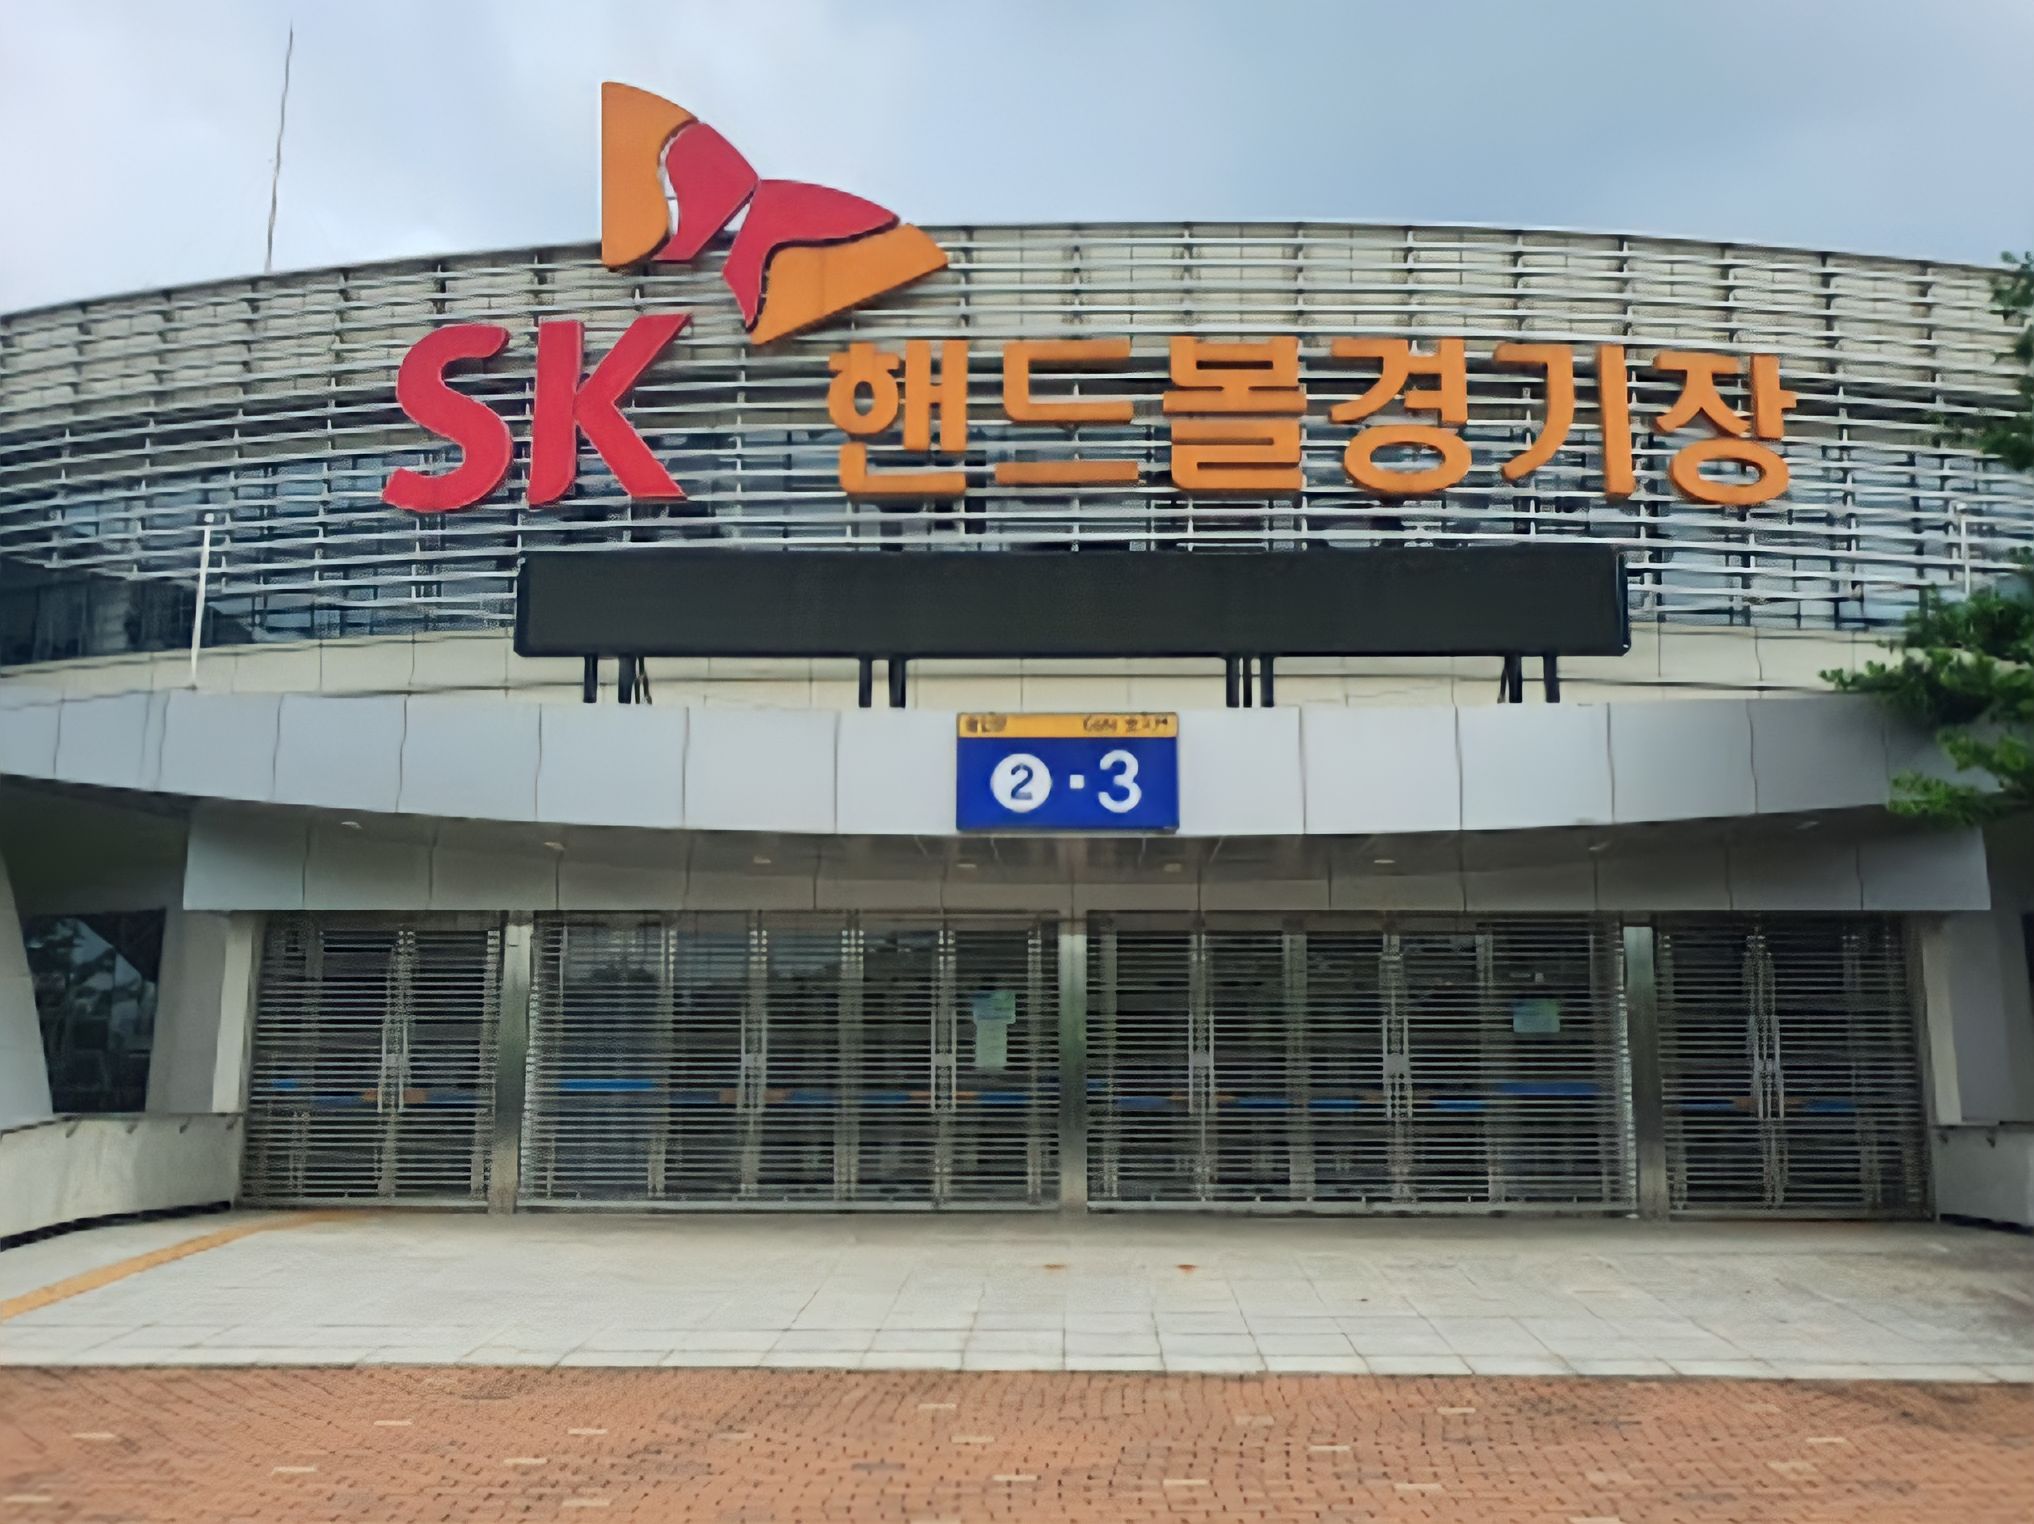 SK Handball Stadium, Seoul